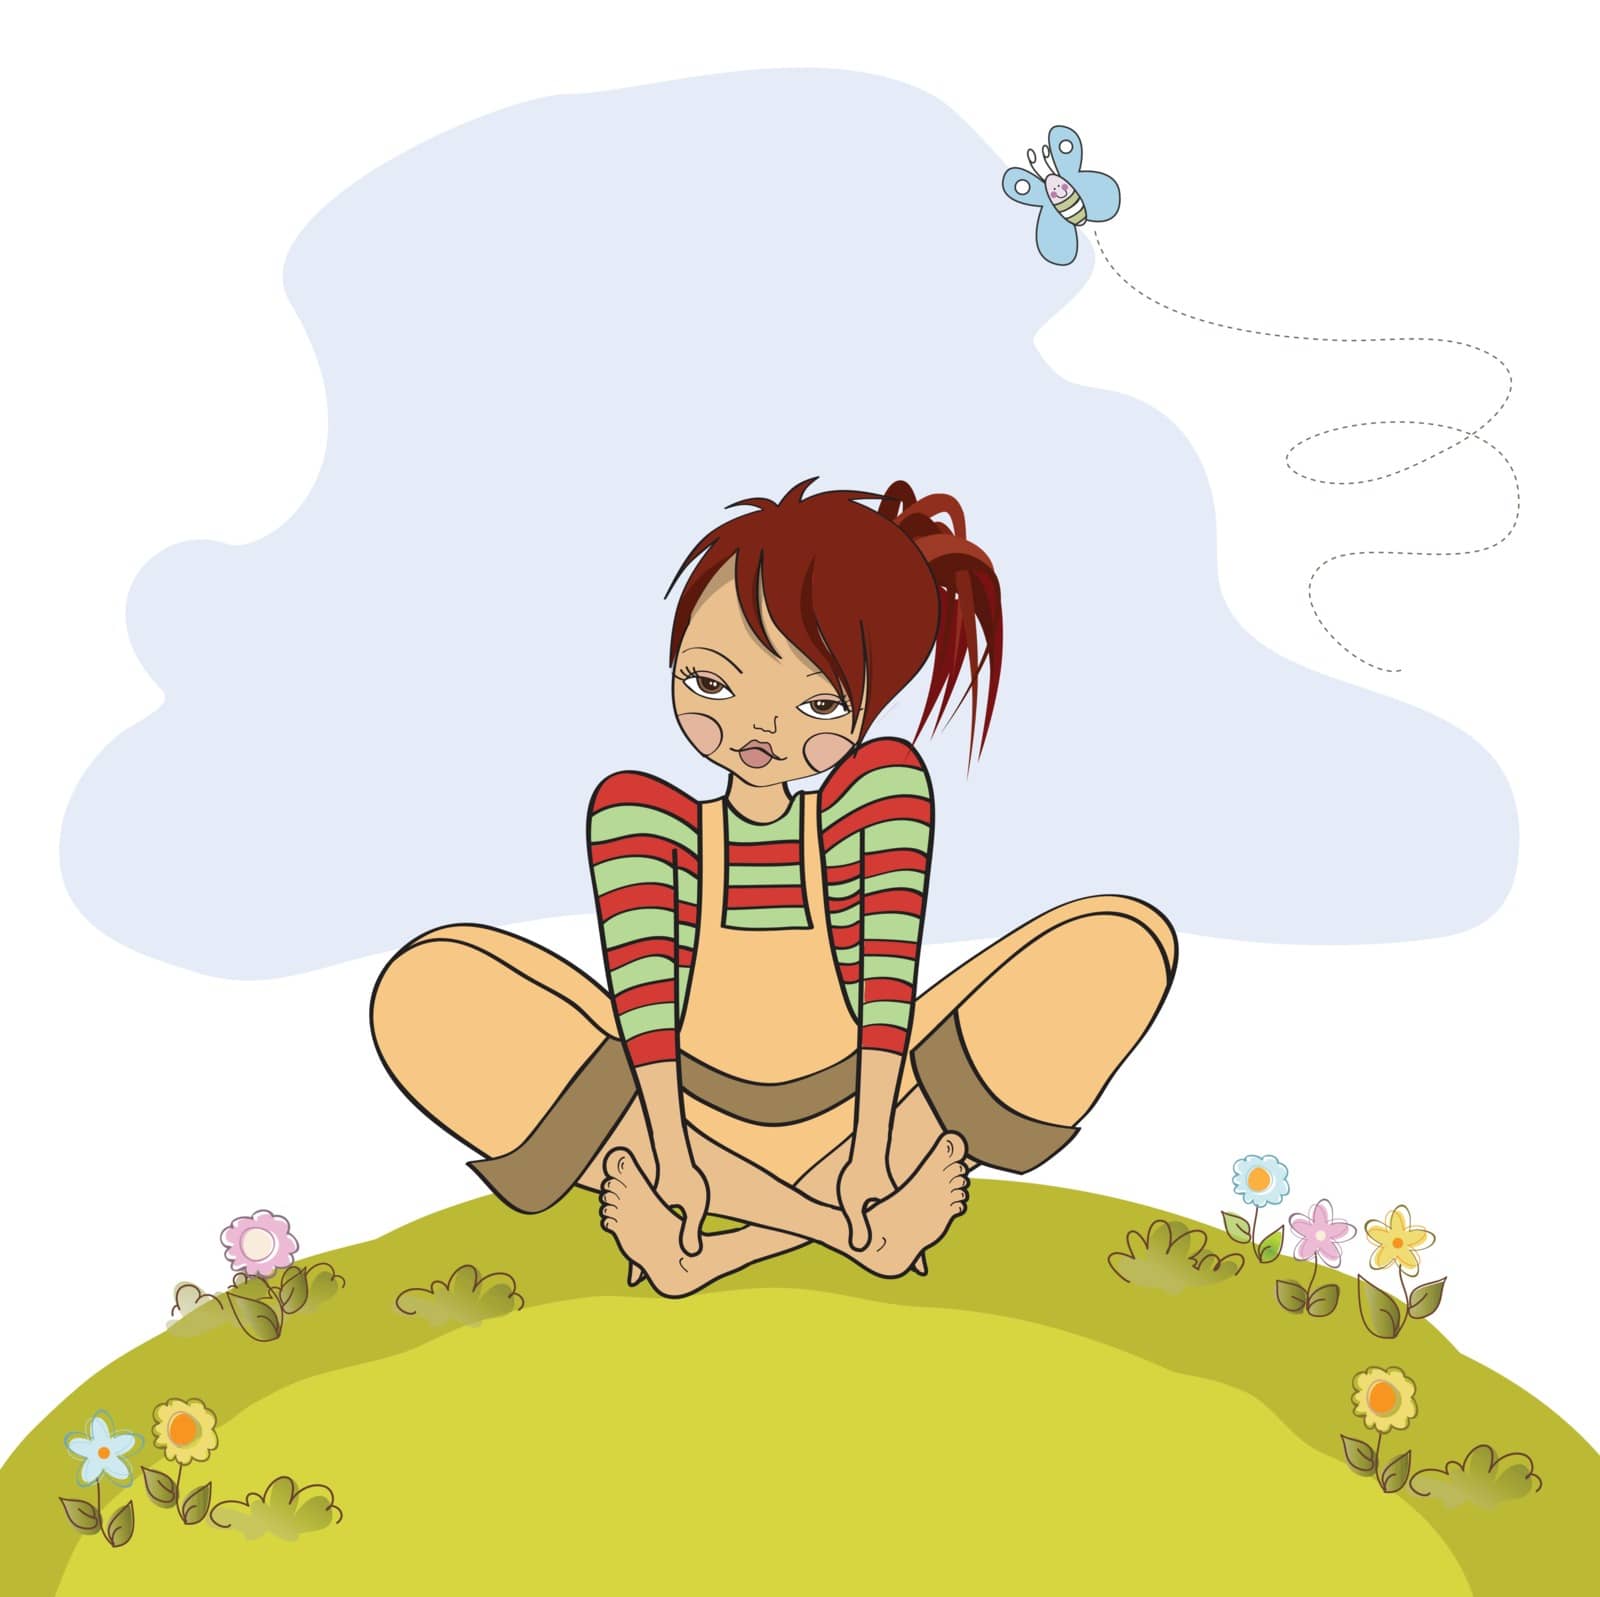 romantic girl sitting barefoot in the grass, vector illustration